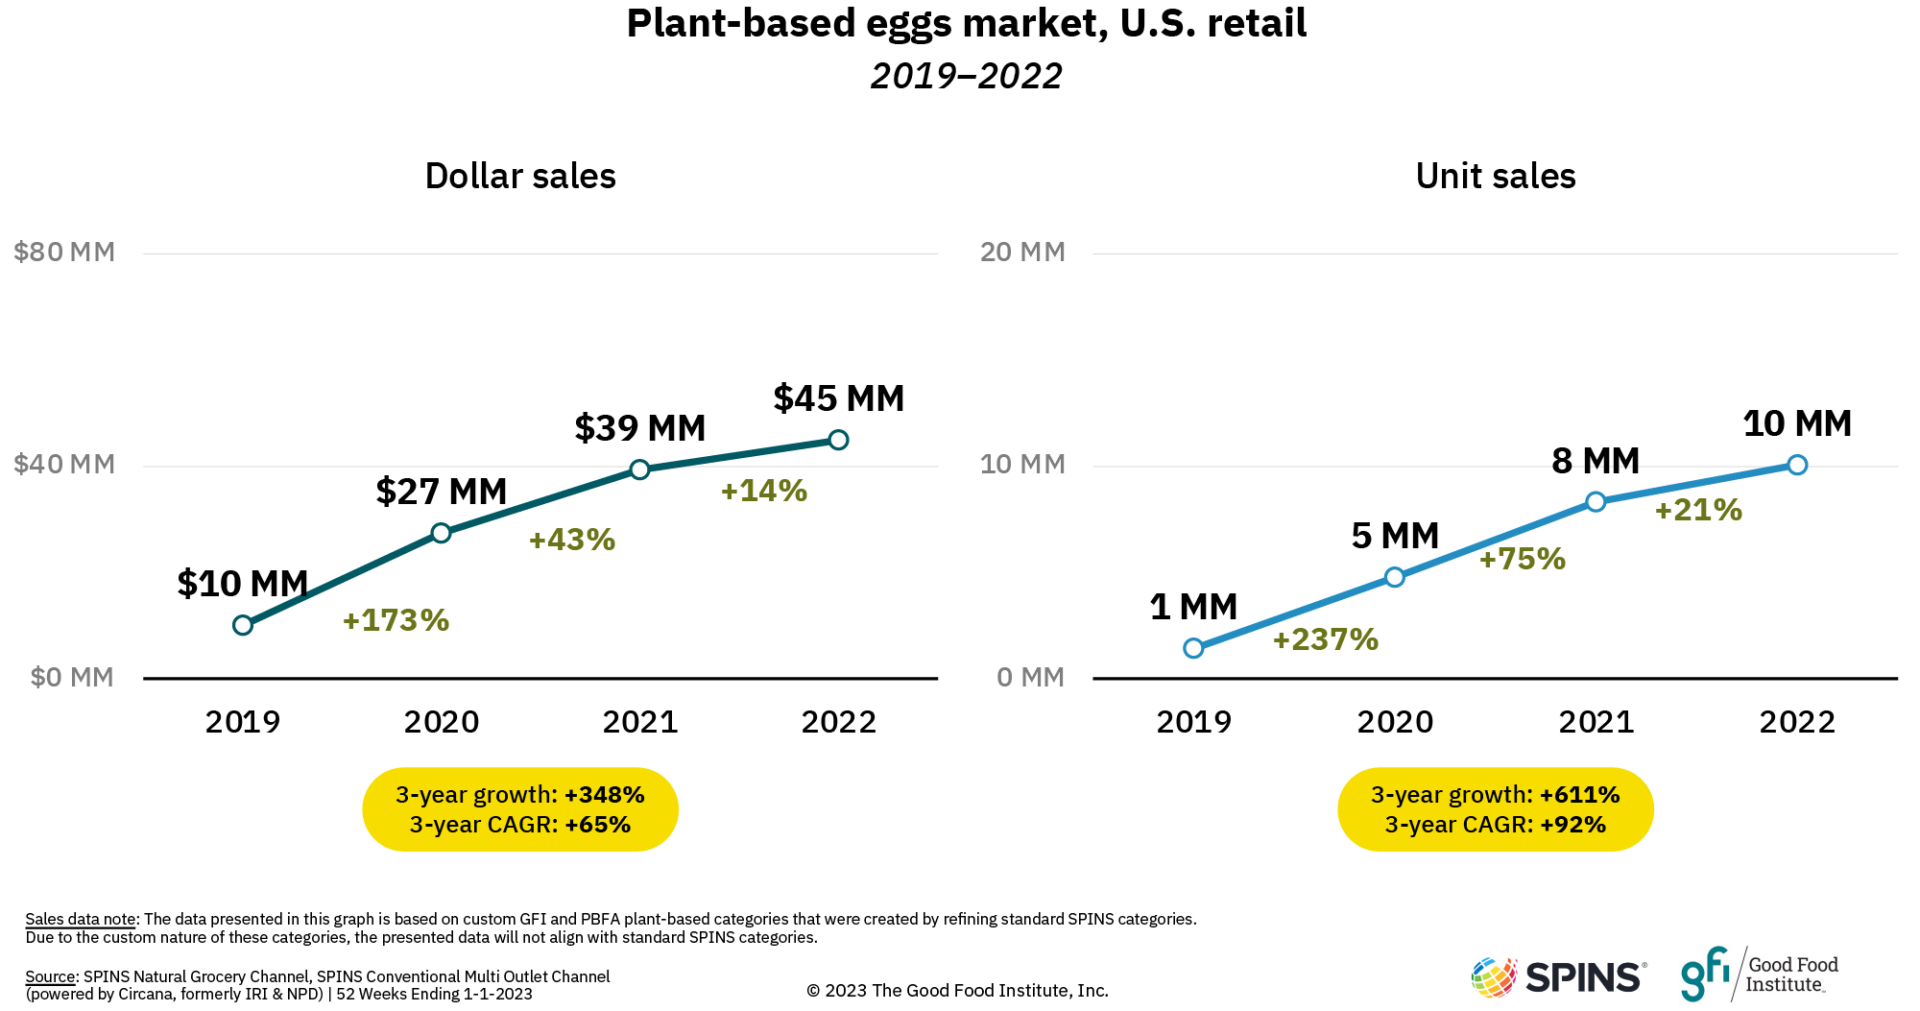 Summary of plant-based eggs sales data